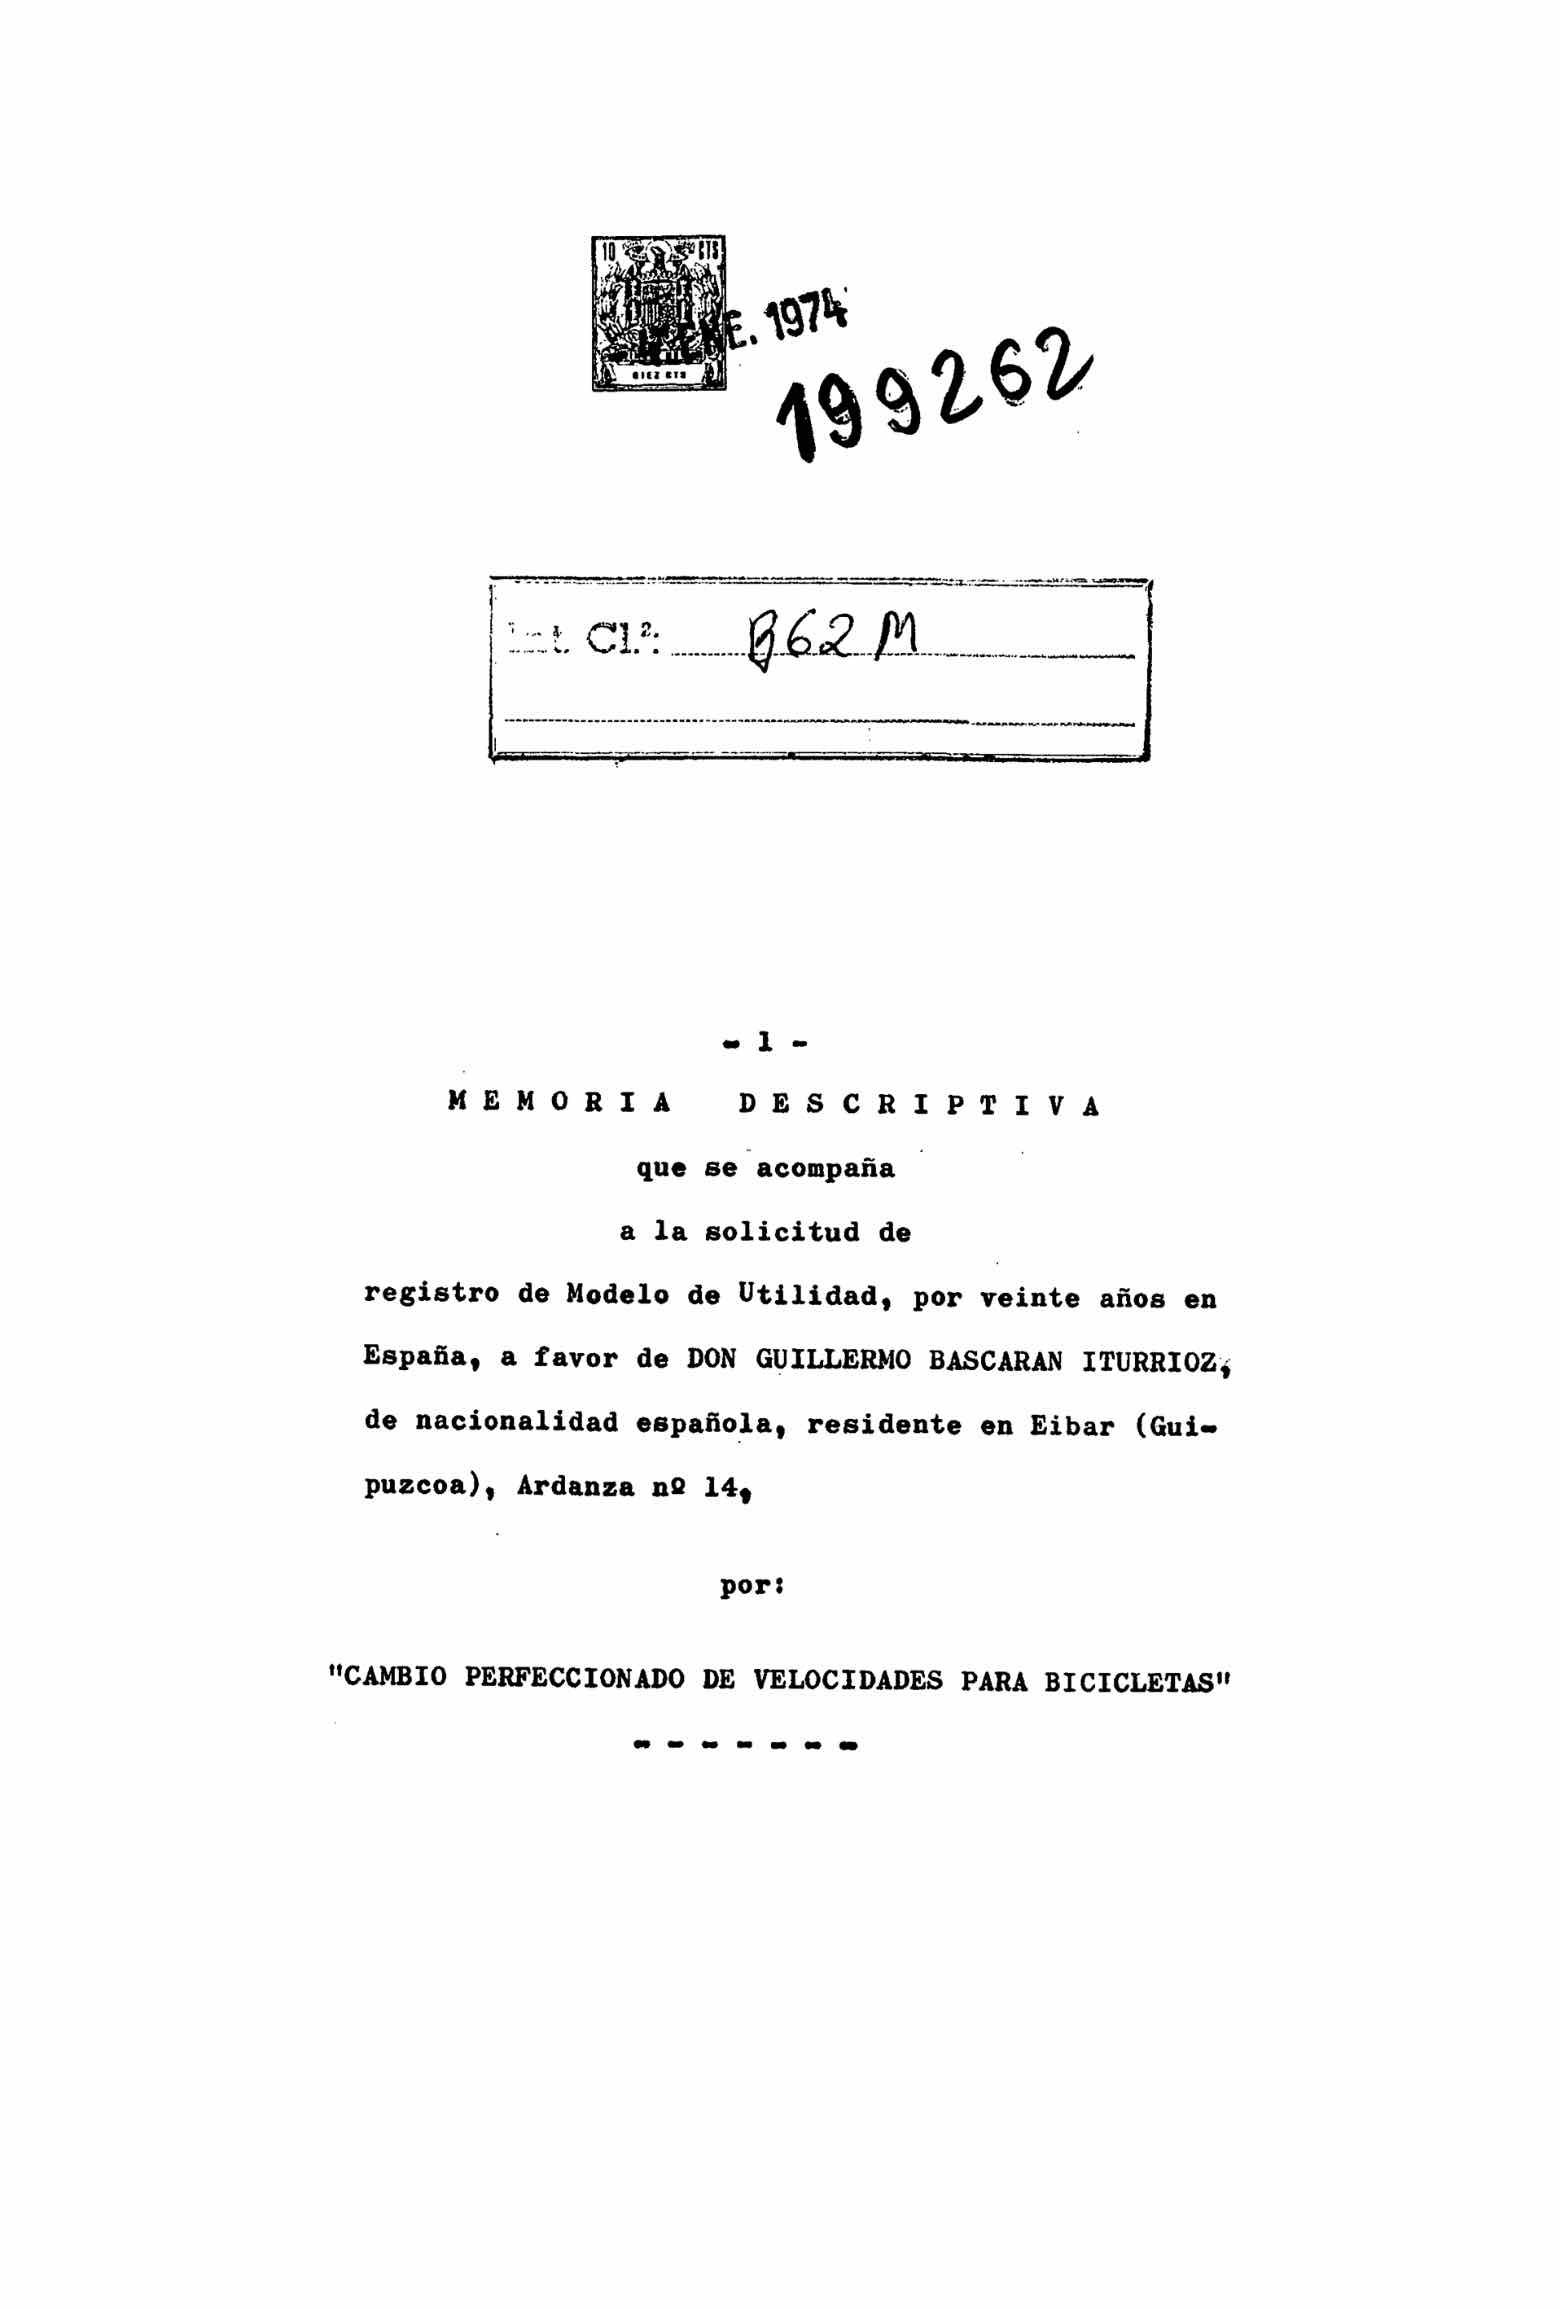 Spanish Patent 199,262 - Triplex scan 1 main image